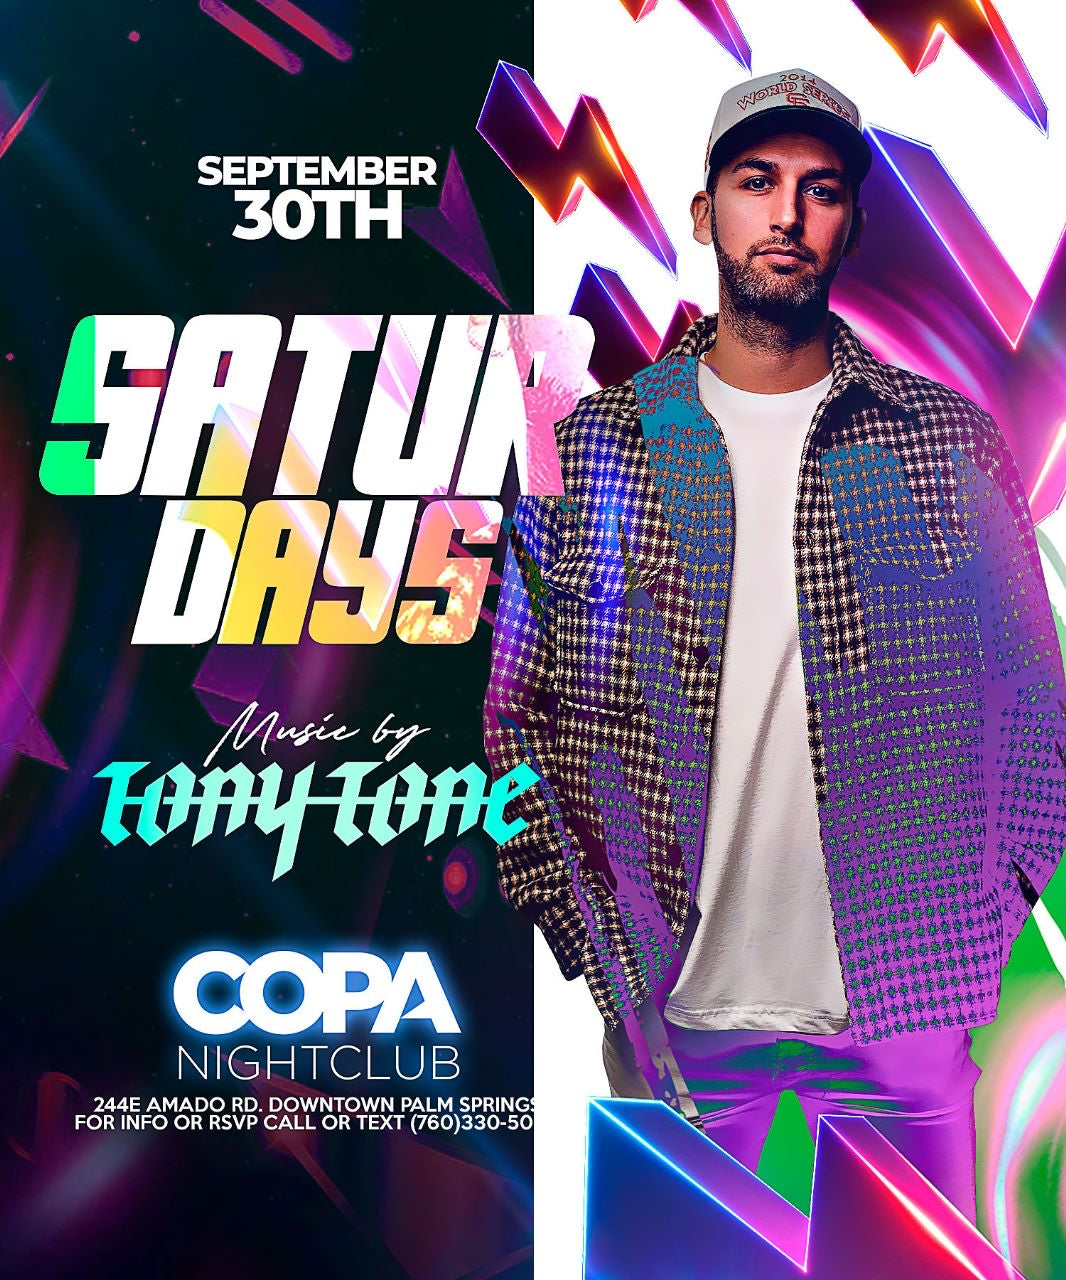 COPA-night-club-palm-springs-sat-night-DJ-Tony-tone-093023